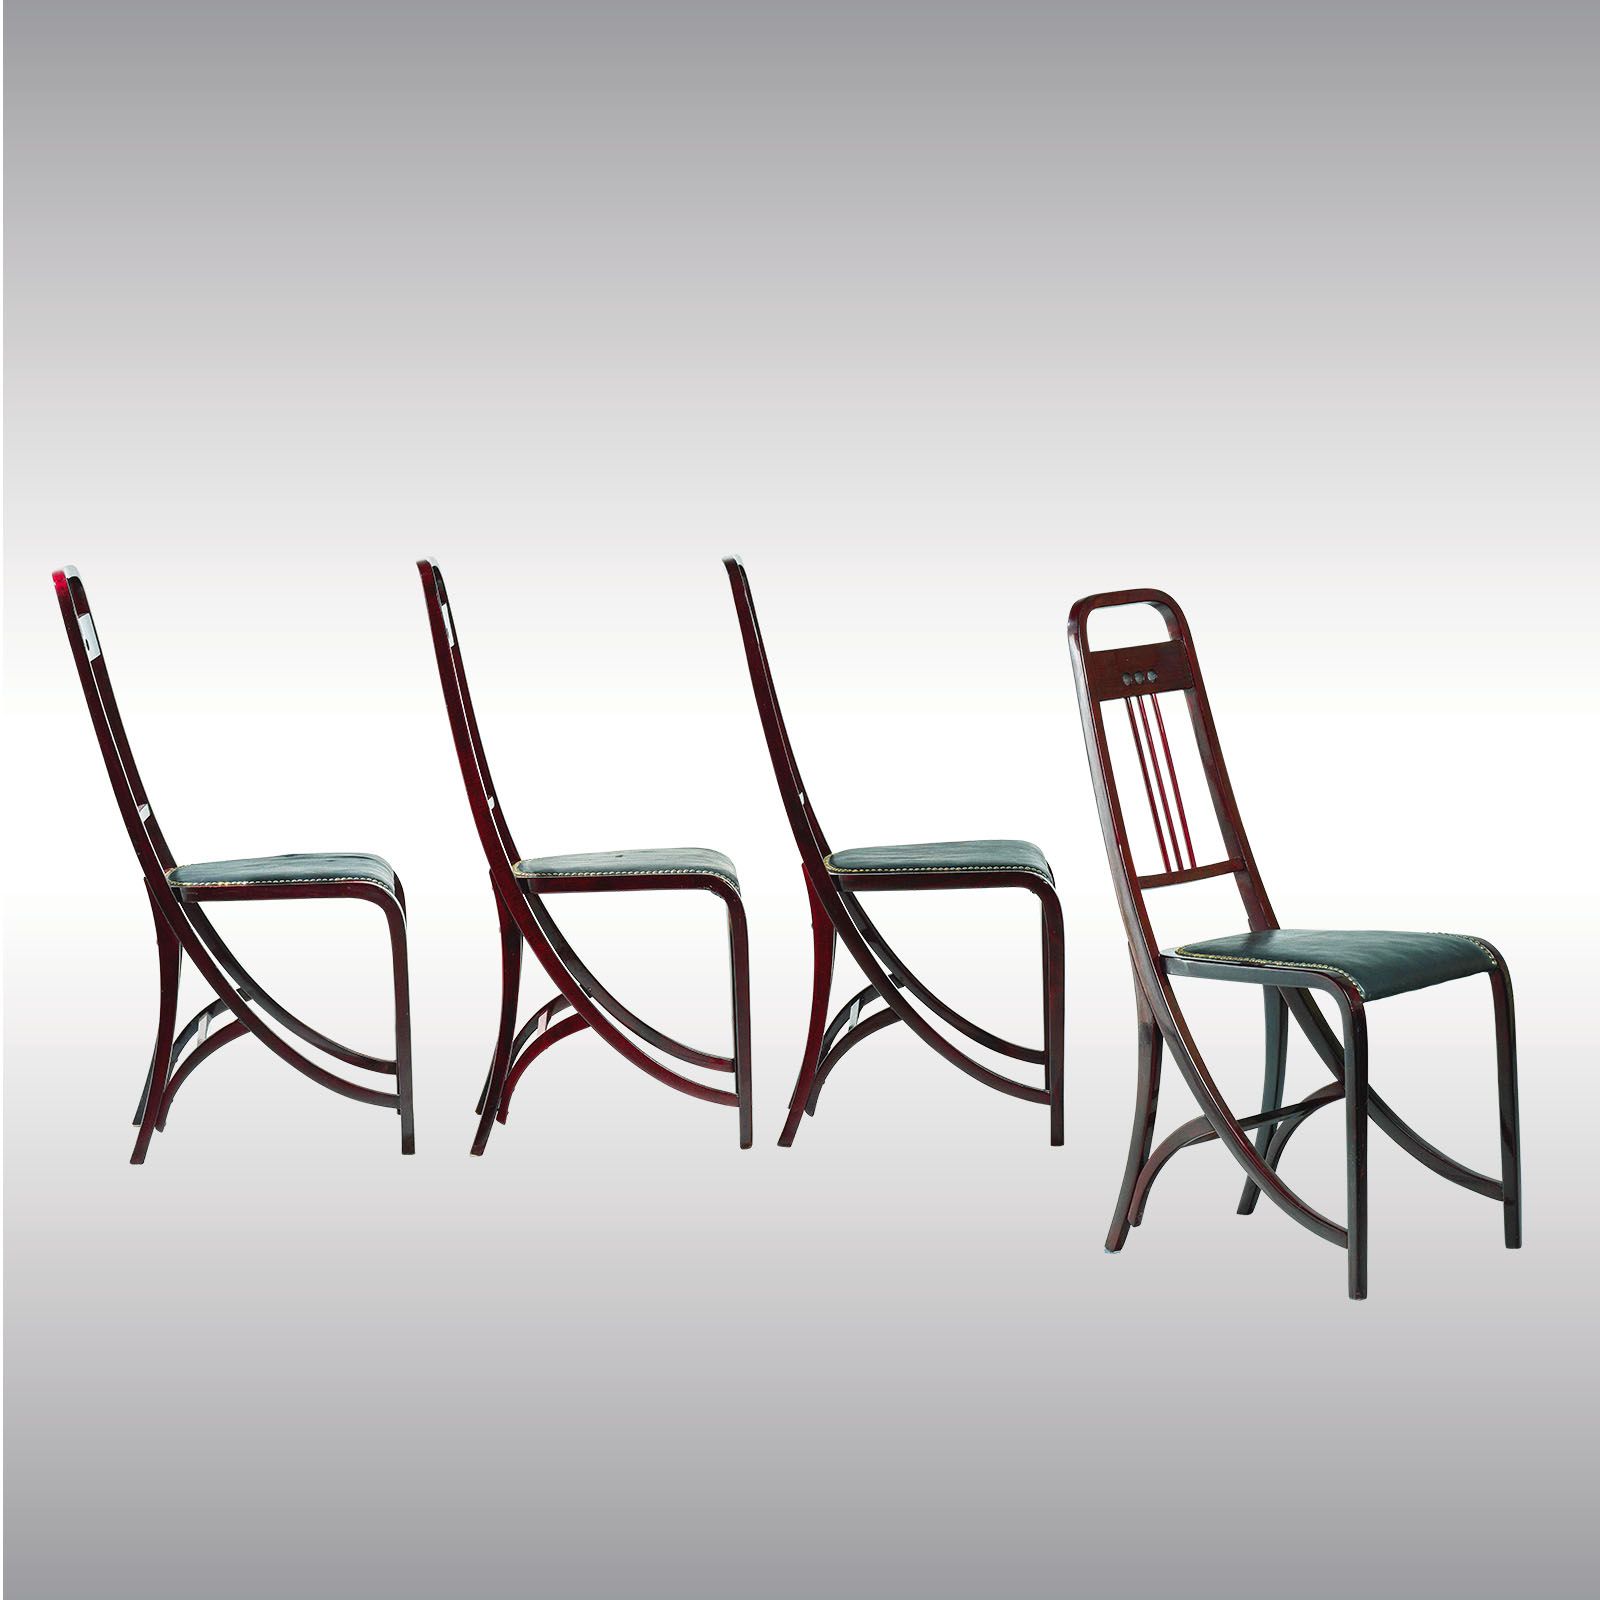 WOKA LAMPS VIENNA - OrderNr.:  50501|Set of four chairs 511 from 1904, Gebrüder Thonet